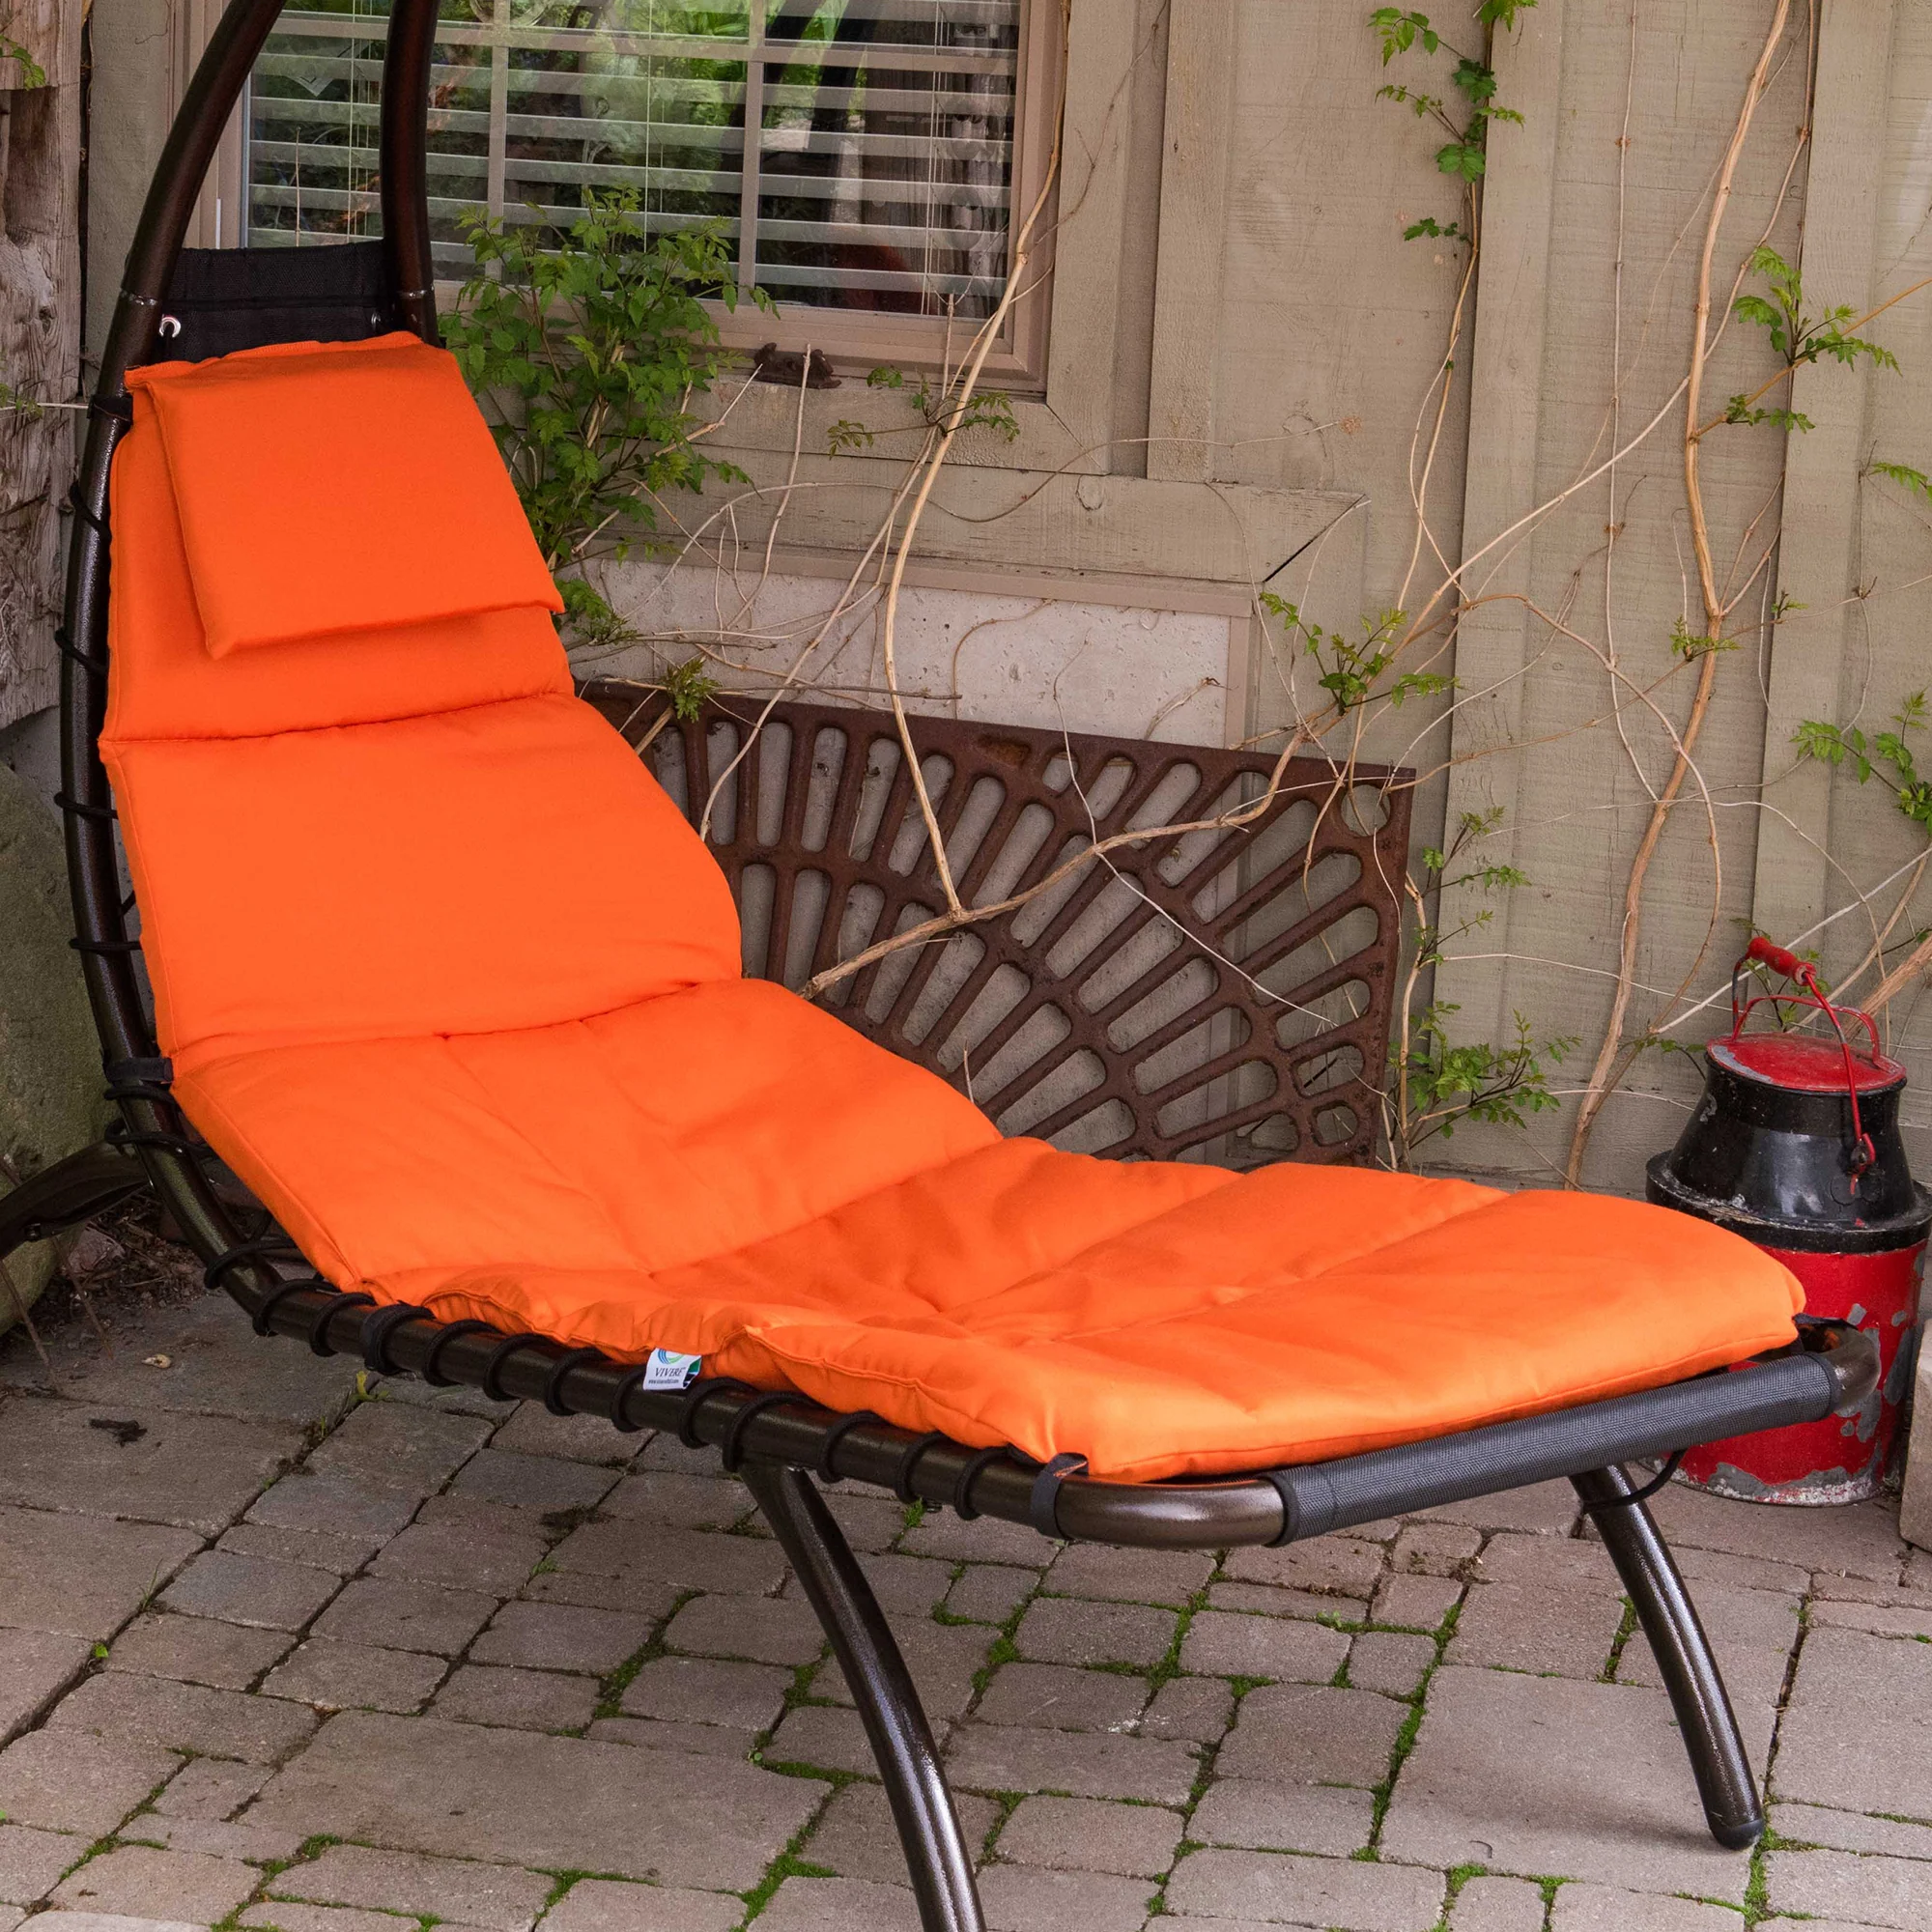 Vivere Original Dream Chair & Lounger Cushion - Orange Zest - Item DRMC-OZ